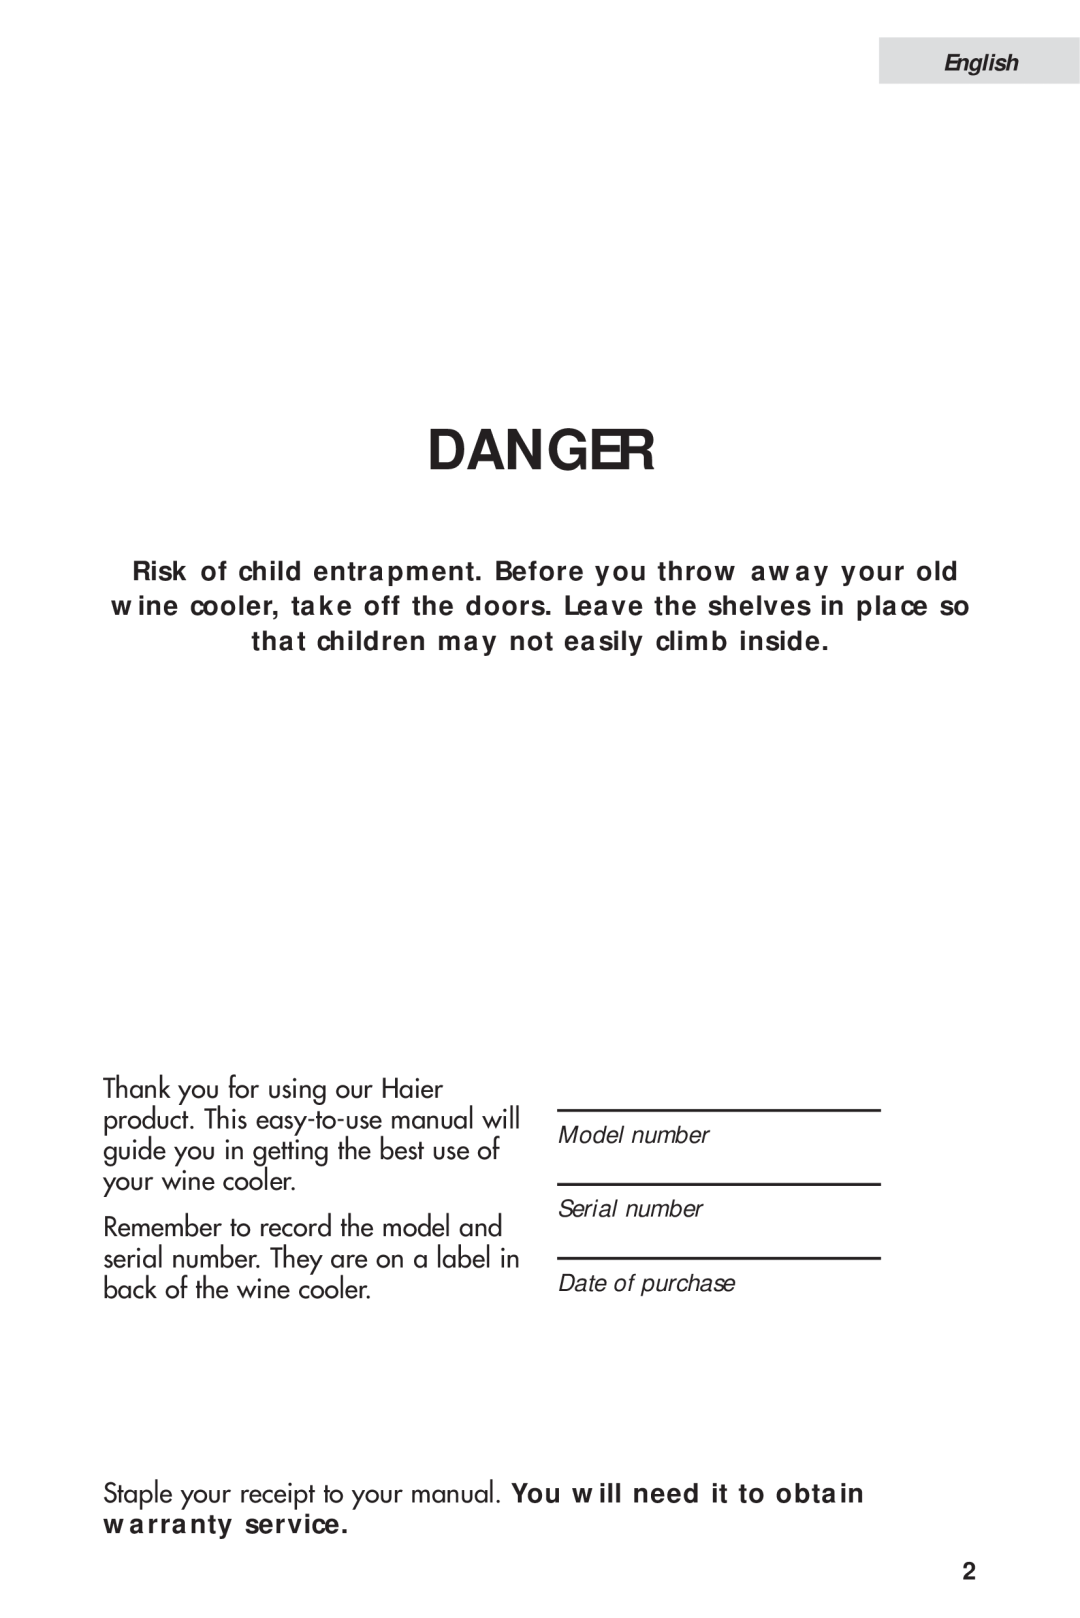 Haier HVH014A manual Danger, warranty service, English 